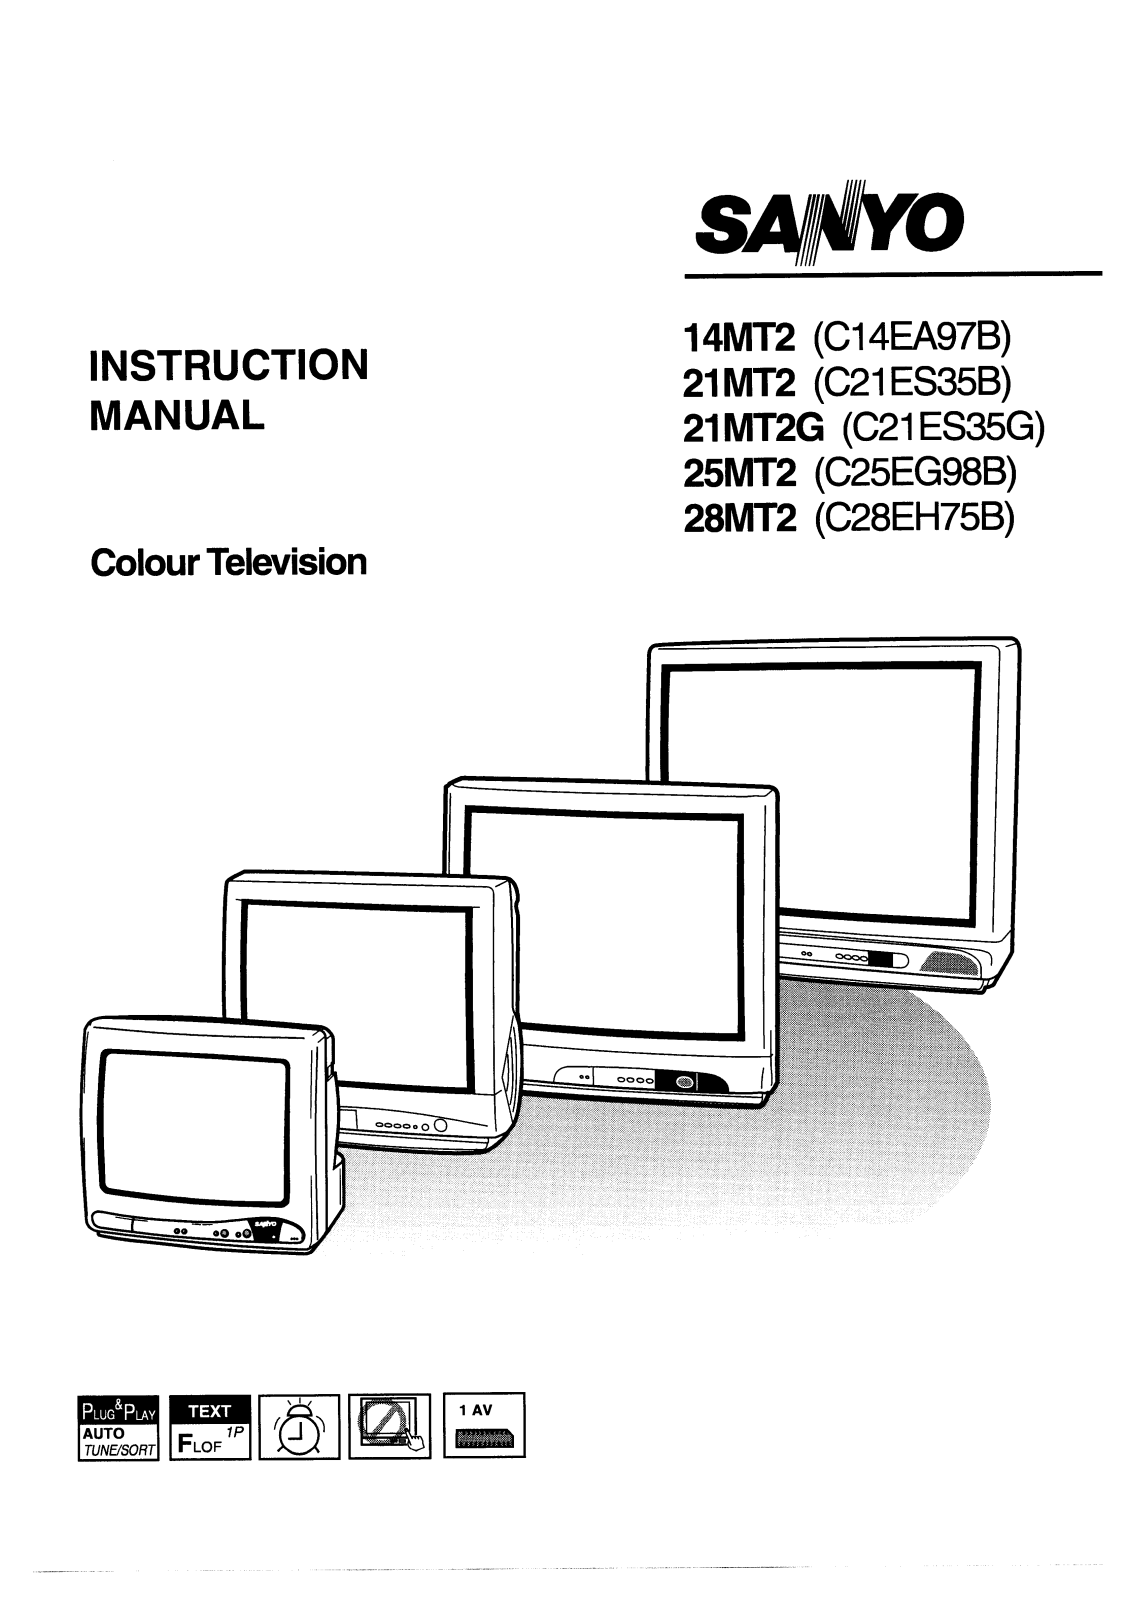 Sanyo C14EA97B, C21ES35B, C21ES35G, C25EG98B, C28EH75B Instruction Manual